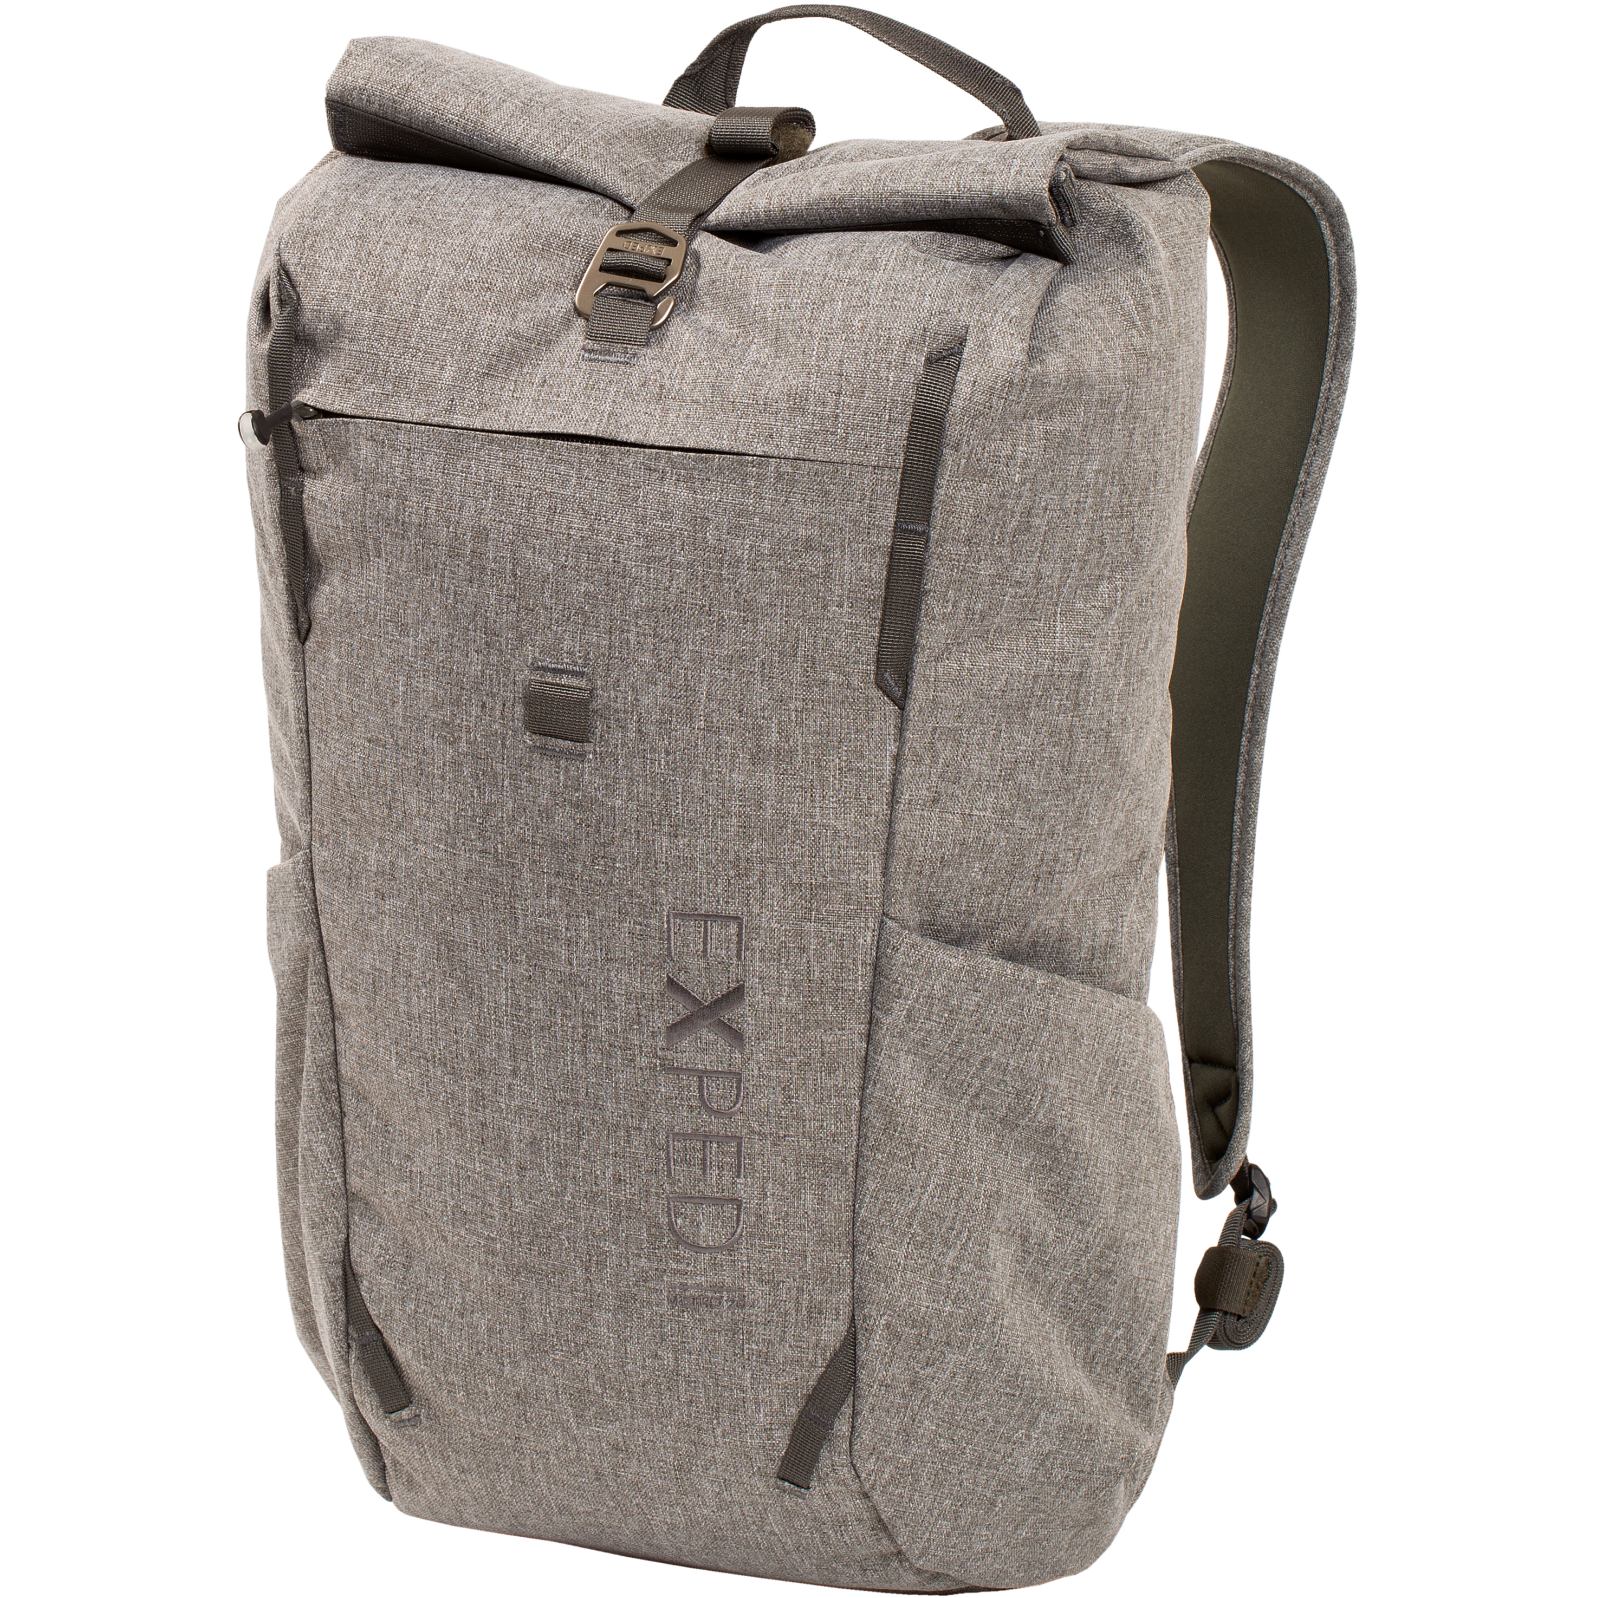 Productfoto van Exped Metro 20 Backpack - grey